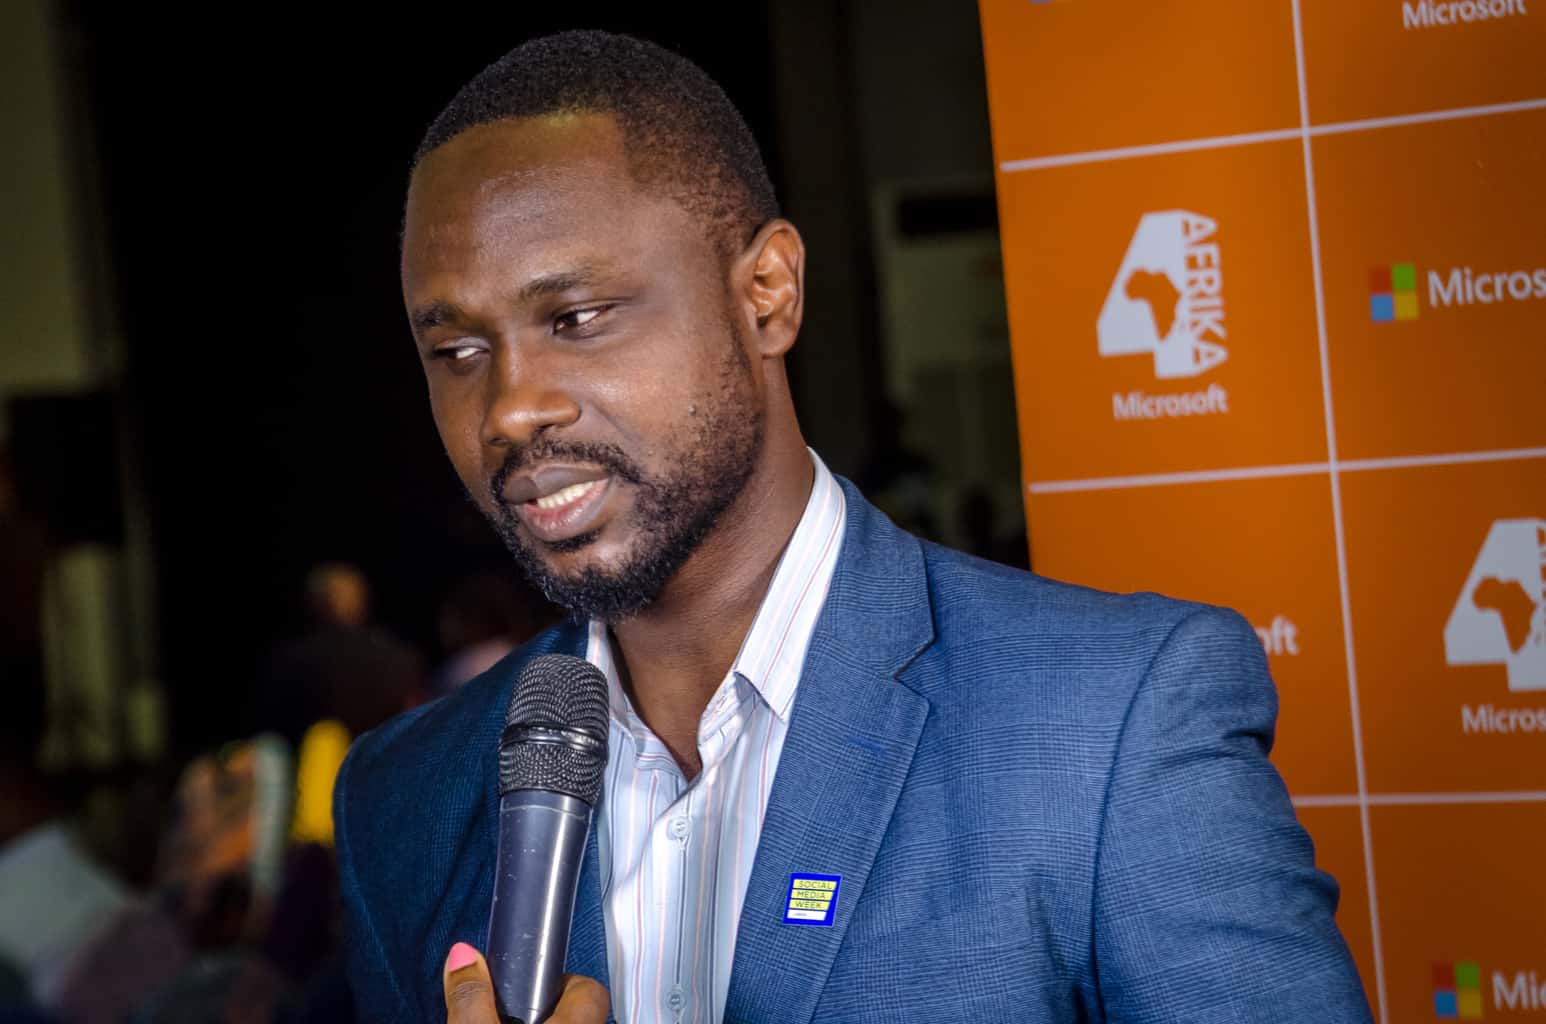 Soromfe Uzomah, responsable des partenariats stratégiques Microsoft 4Afrika.